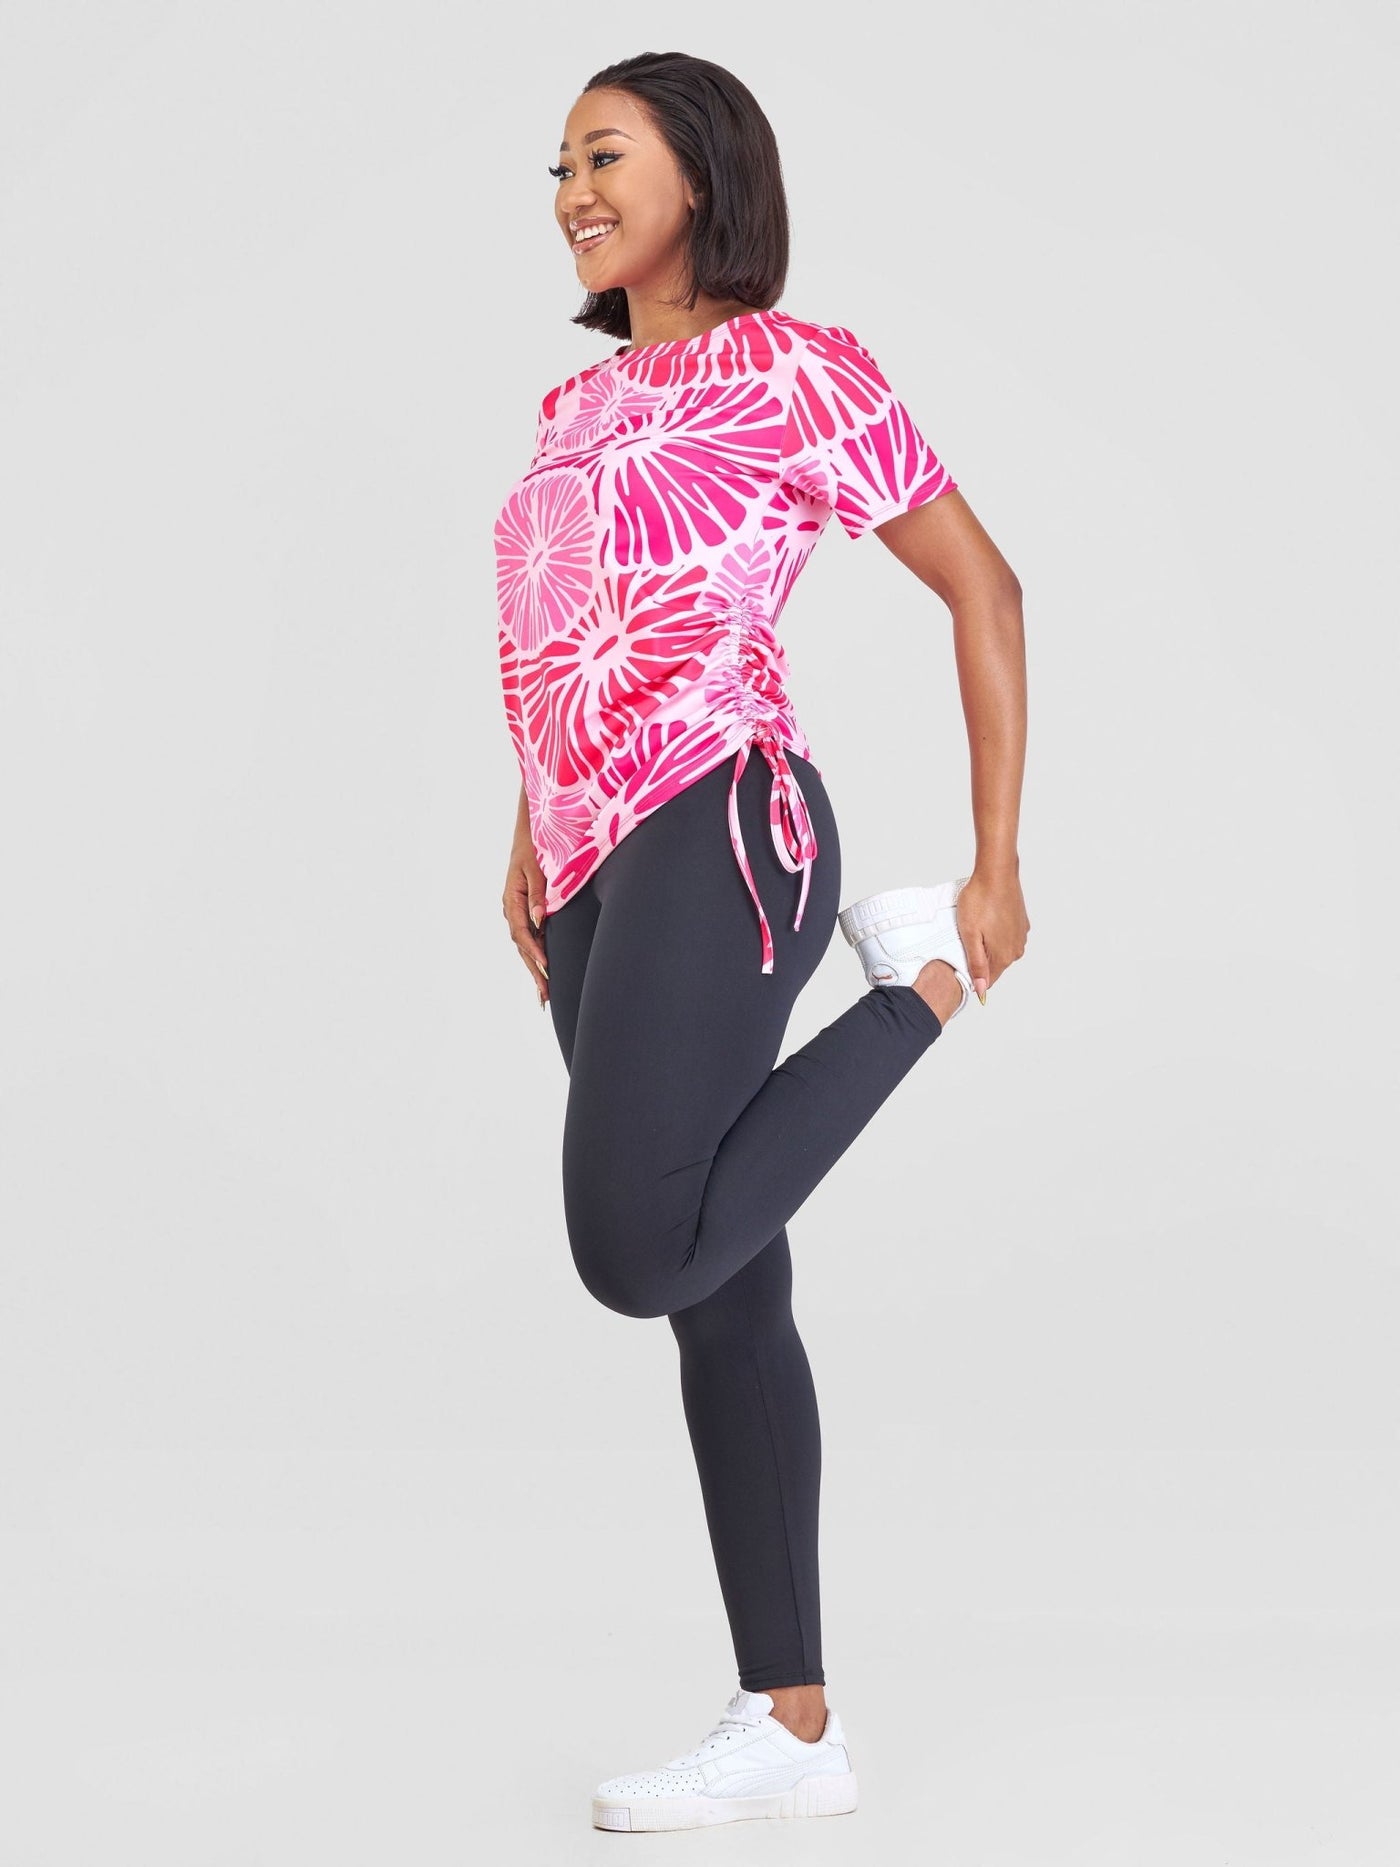 Vivo Lero Short Sleeve Drawstring Top - Pink Kiwi Print - Shopzetu